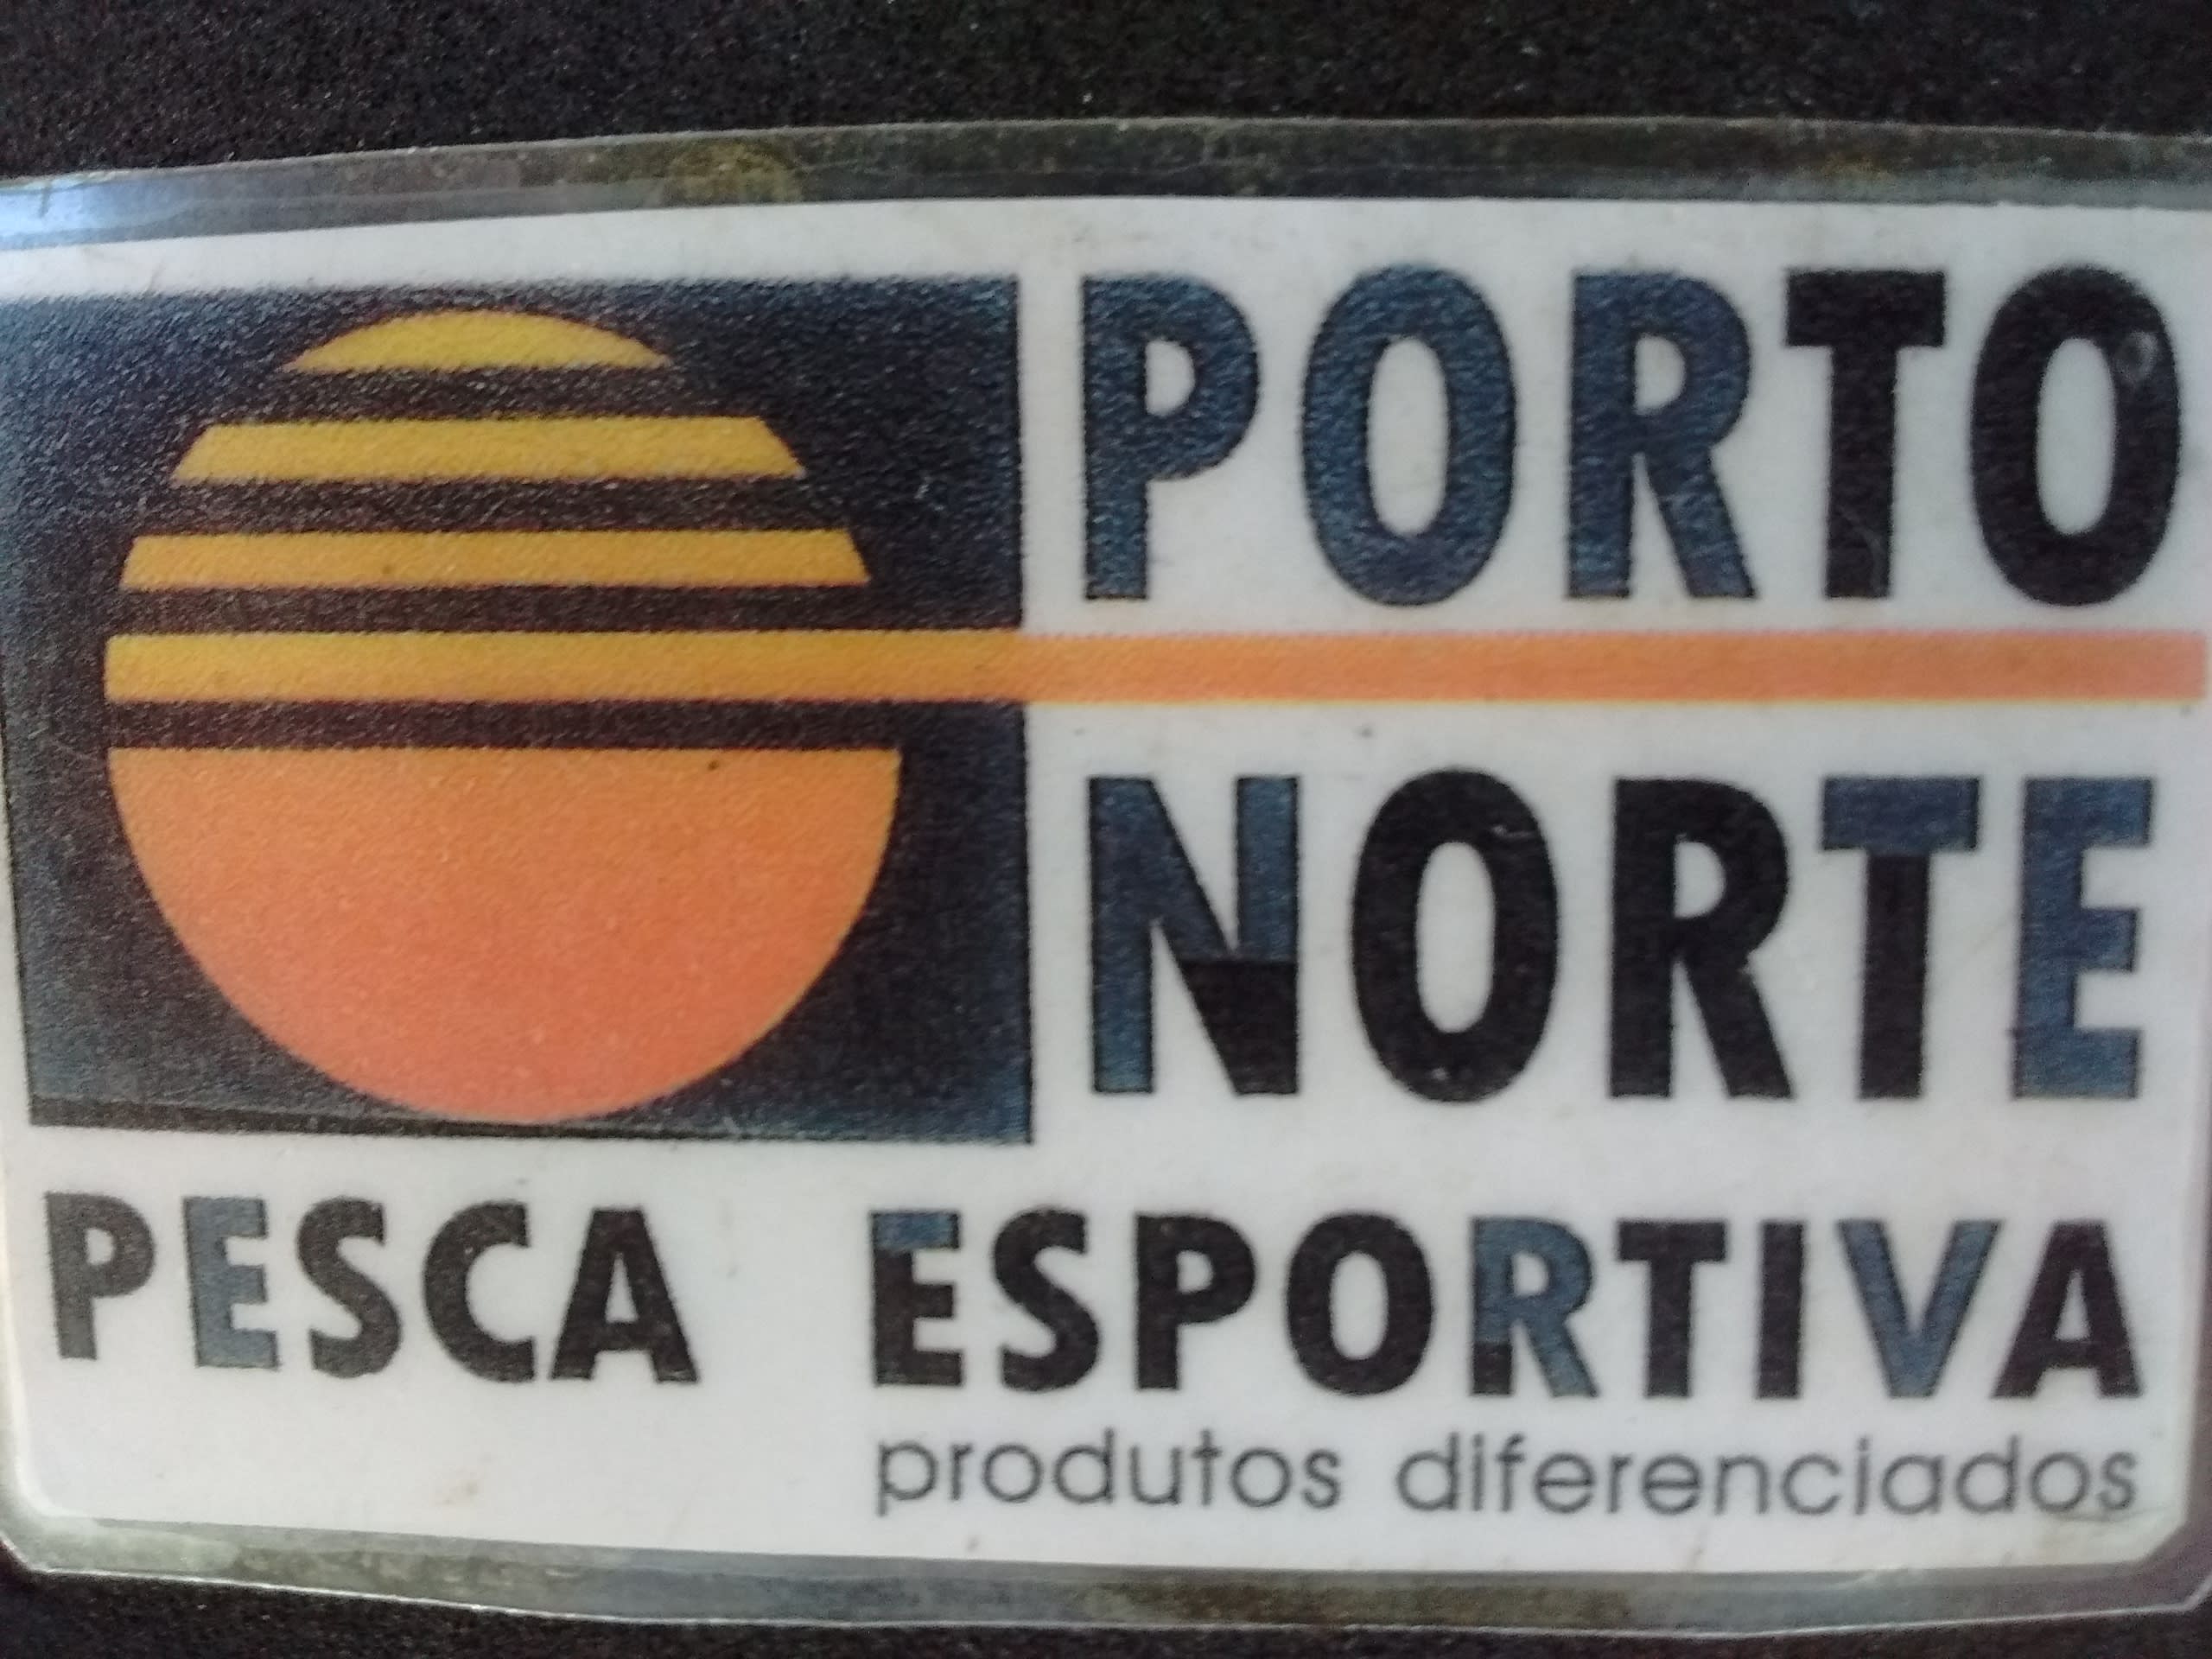 Porto Norte Pesca